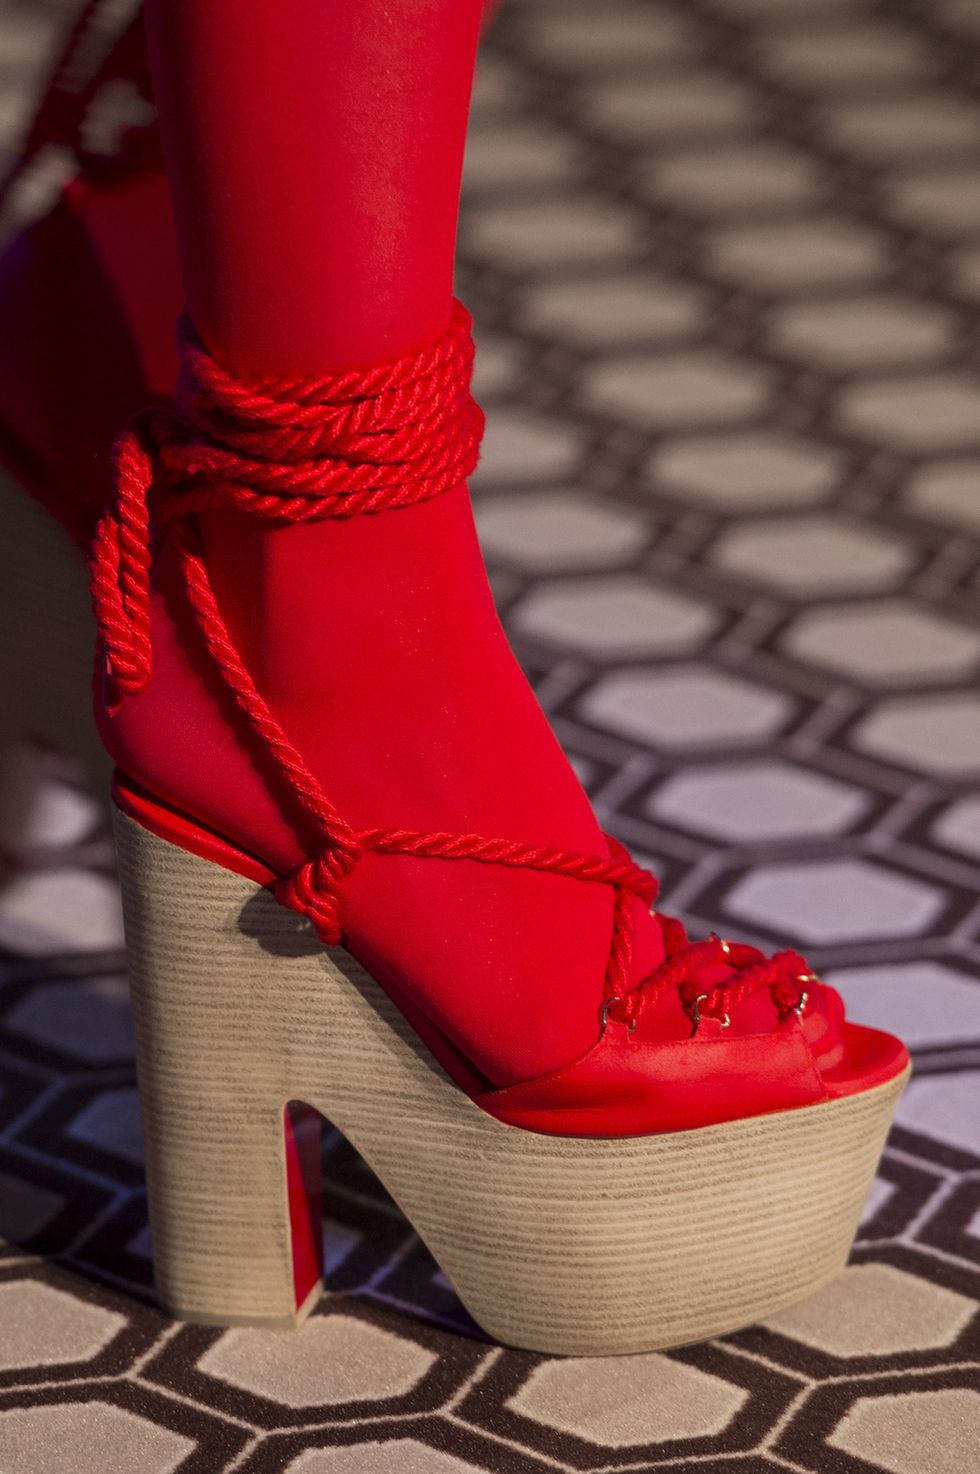 Footwear, Red, High heels, Carmine, Fashion, Beige, Close-up, Maroon, Foot, Sandal, 